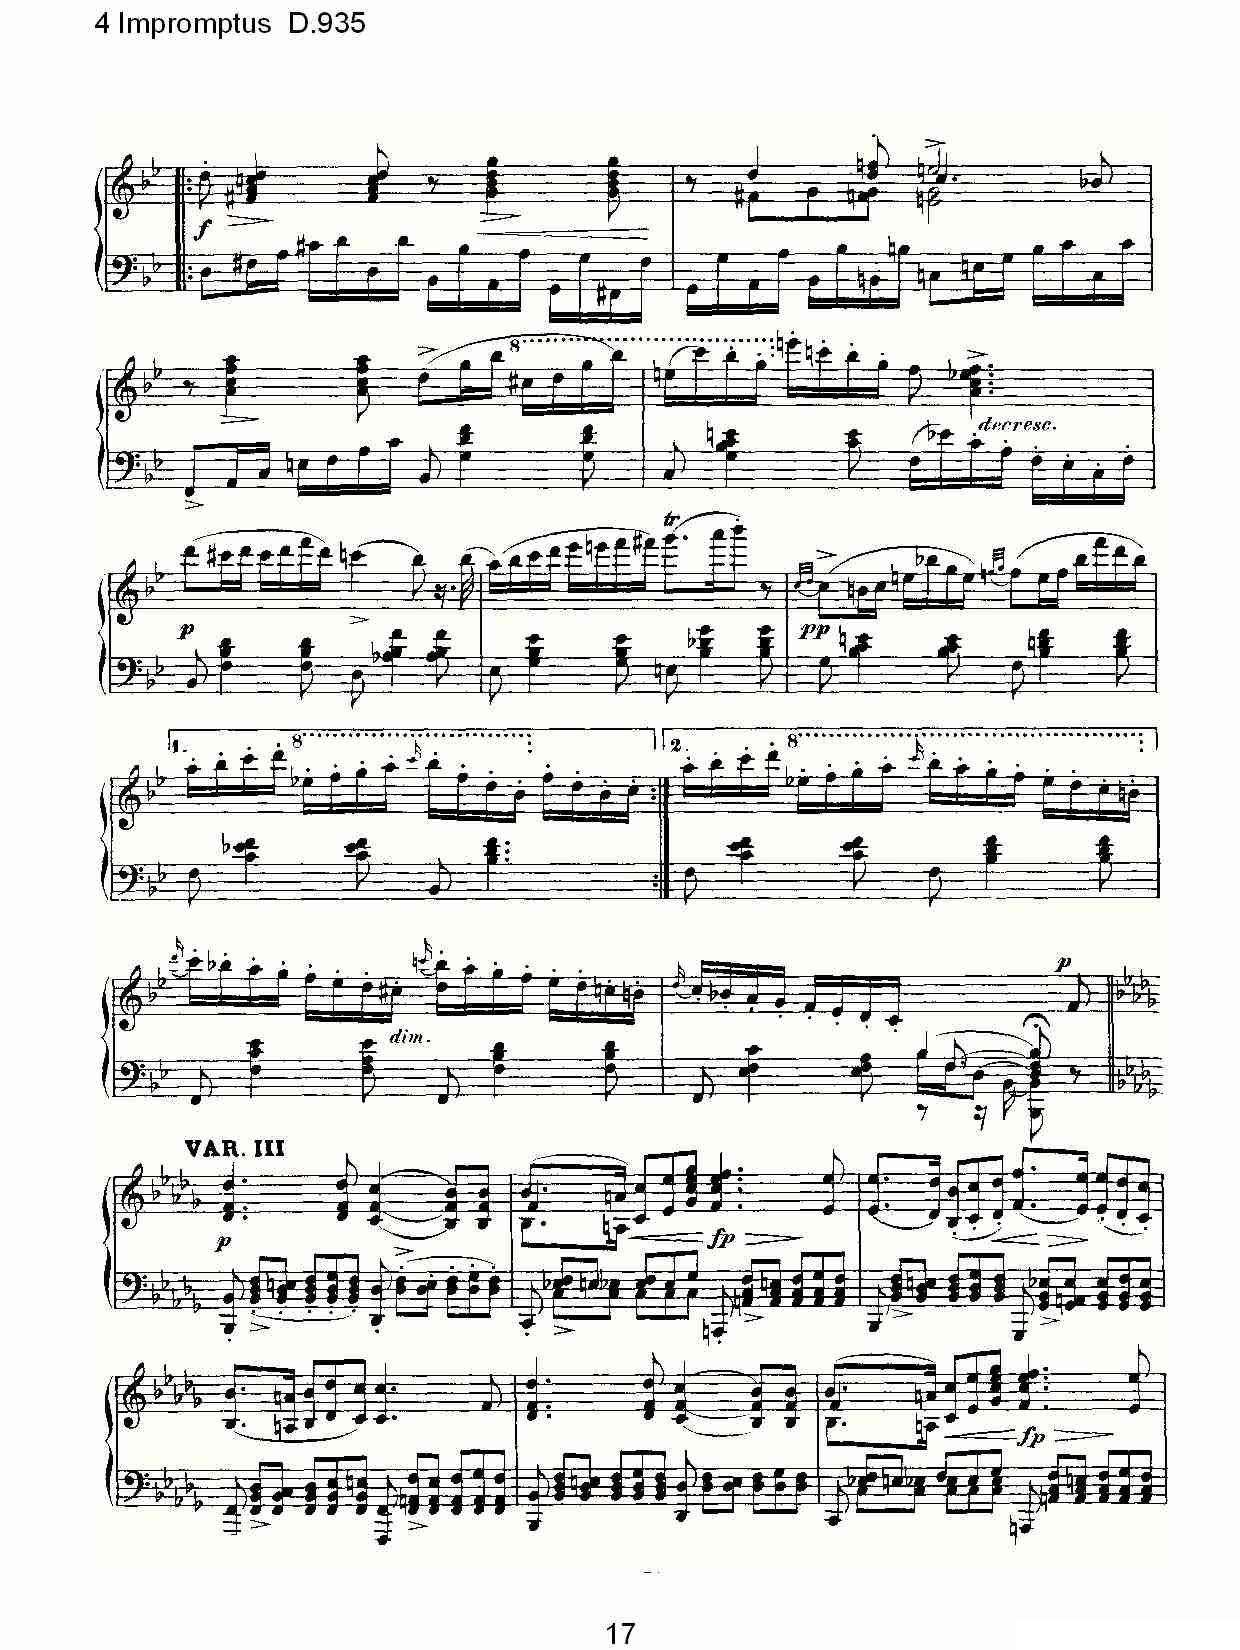 4 Impromptus D.935（4人即兴演奏D.935）钢琴曲谱（图17）